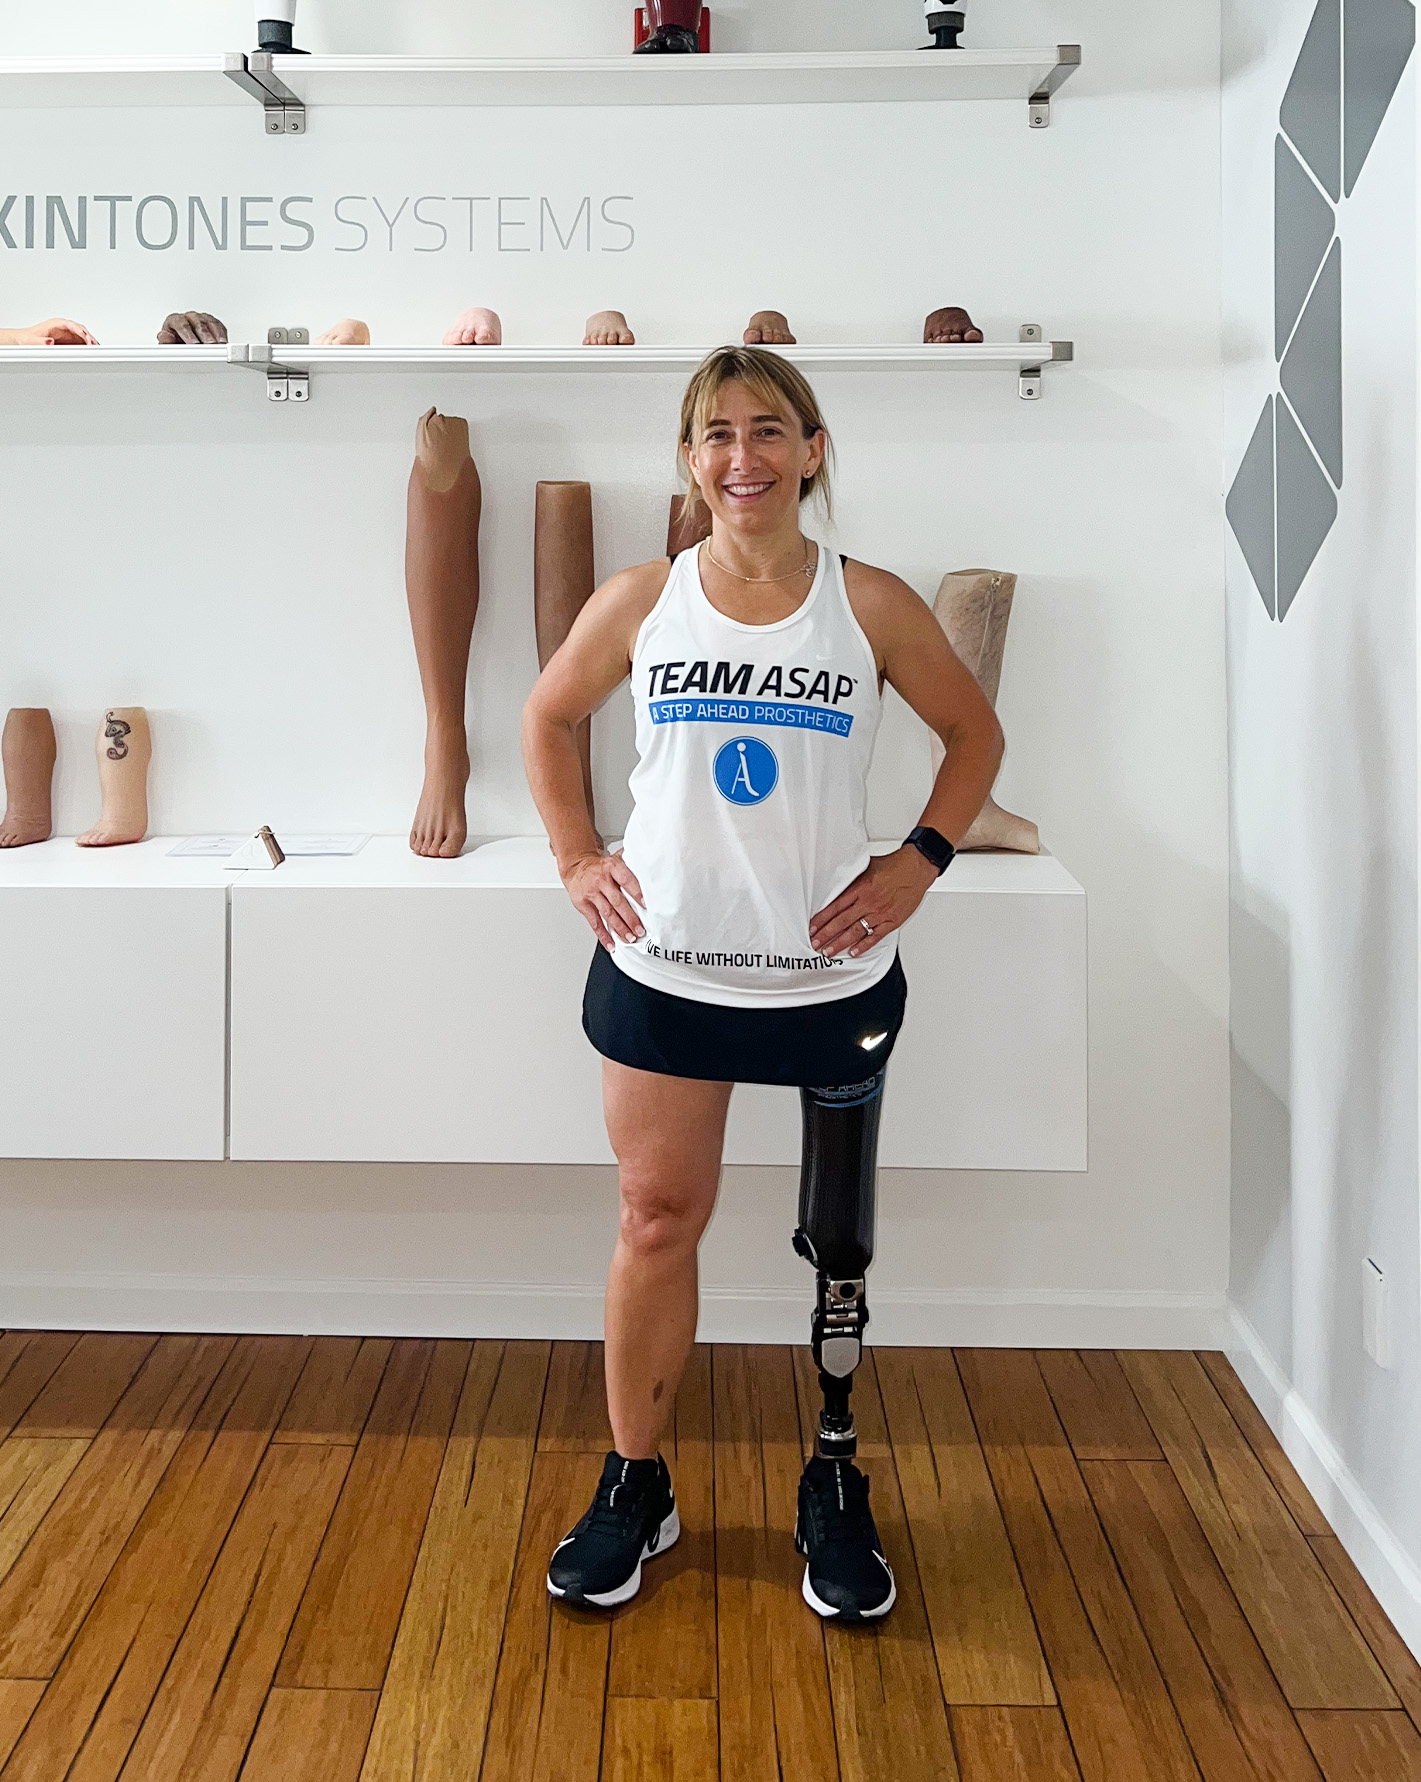 Sarah Reinertsen an adaptive Athlete 